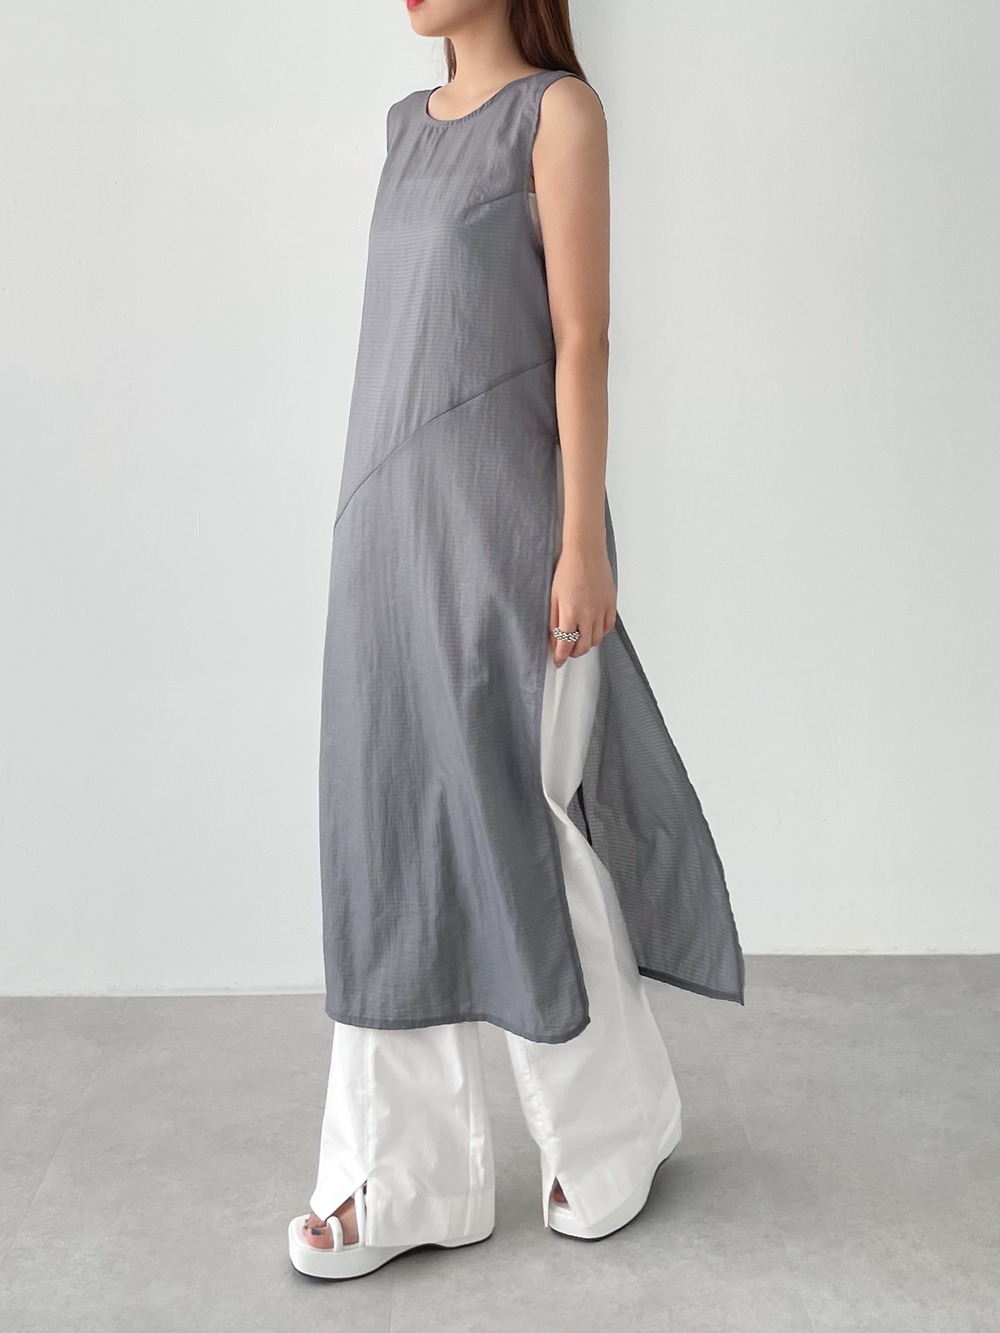 nylon sleeveless dress (2color)